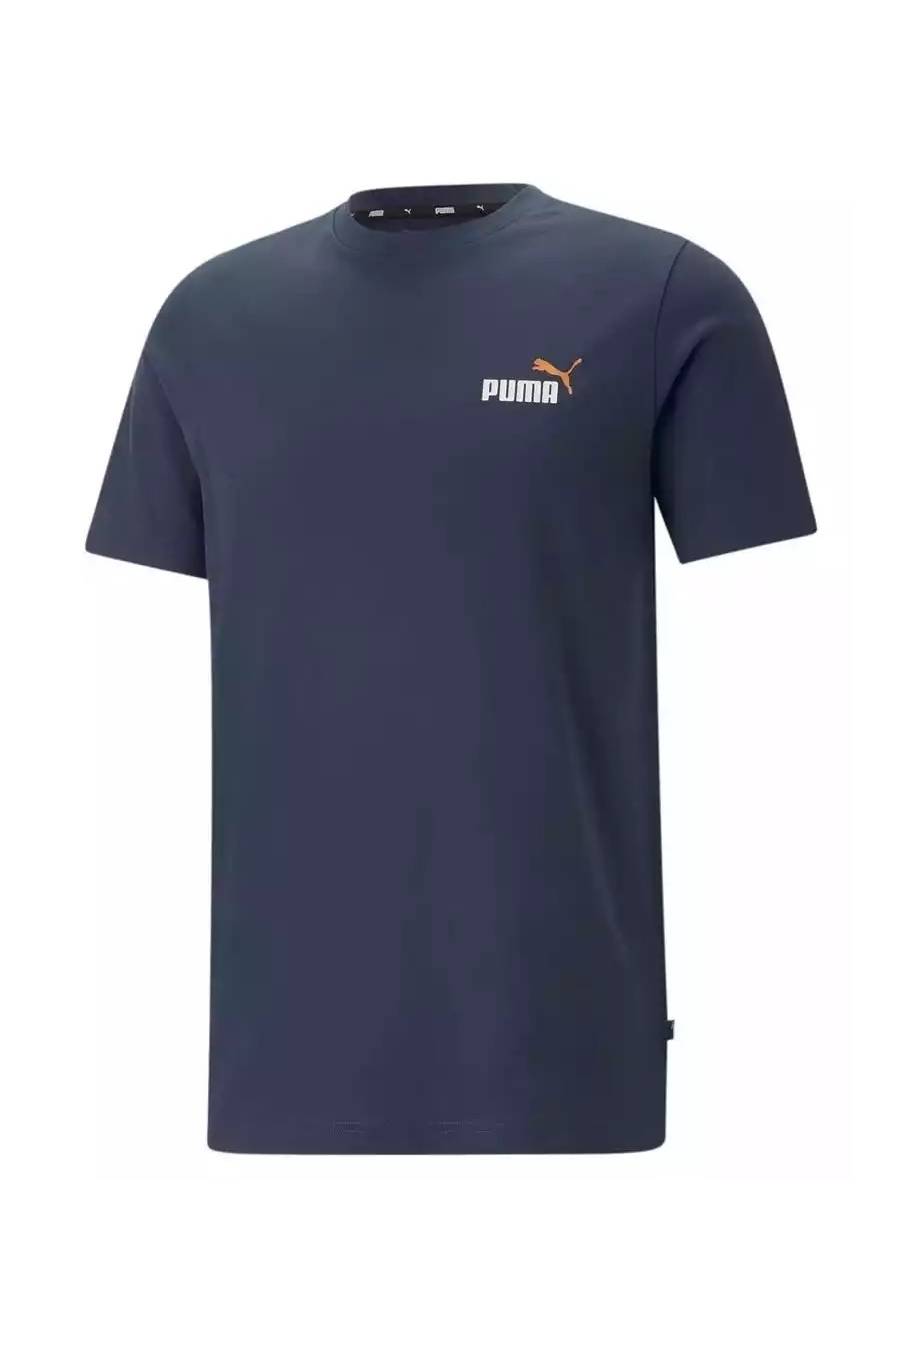 Camiseta Puma Essentials 2 Small Logo 674470-15